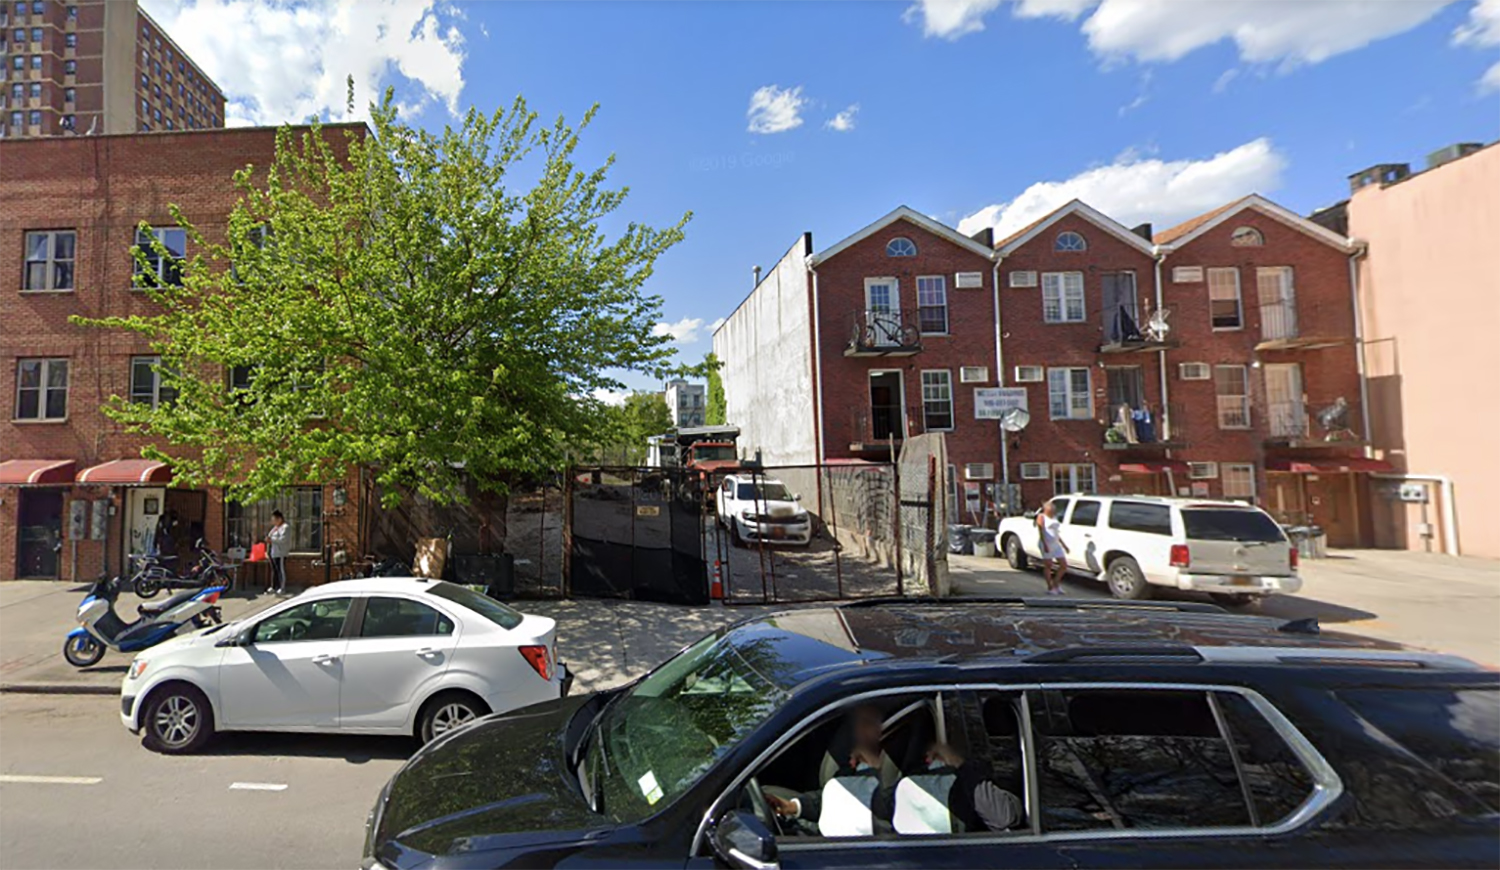 1845 Pitkin Avenue in Brownsville, Brooklyn